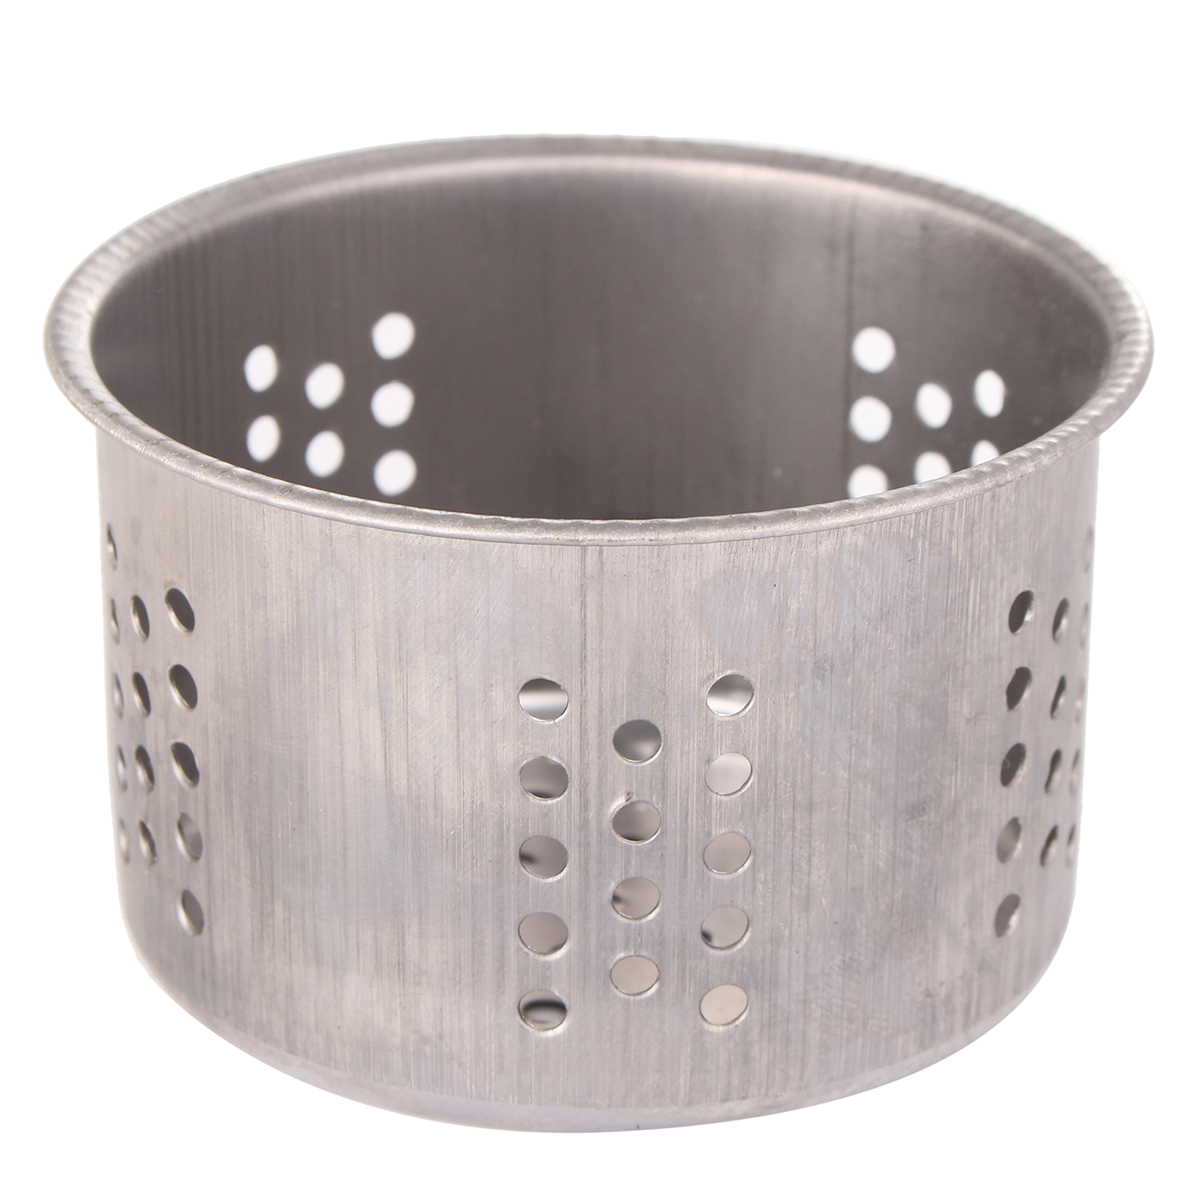 Stainless-Steel-Tea-Pot-Kettle-Removable-Infuser-Filter-Tea-Pot-14161820cm-1333231